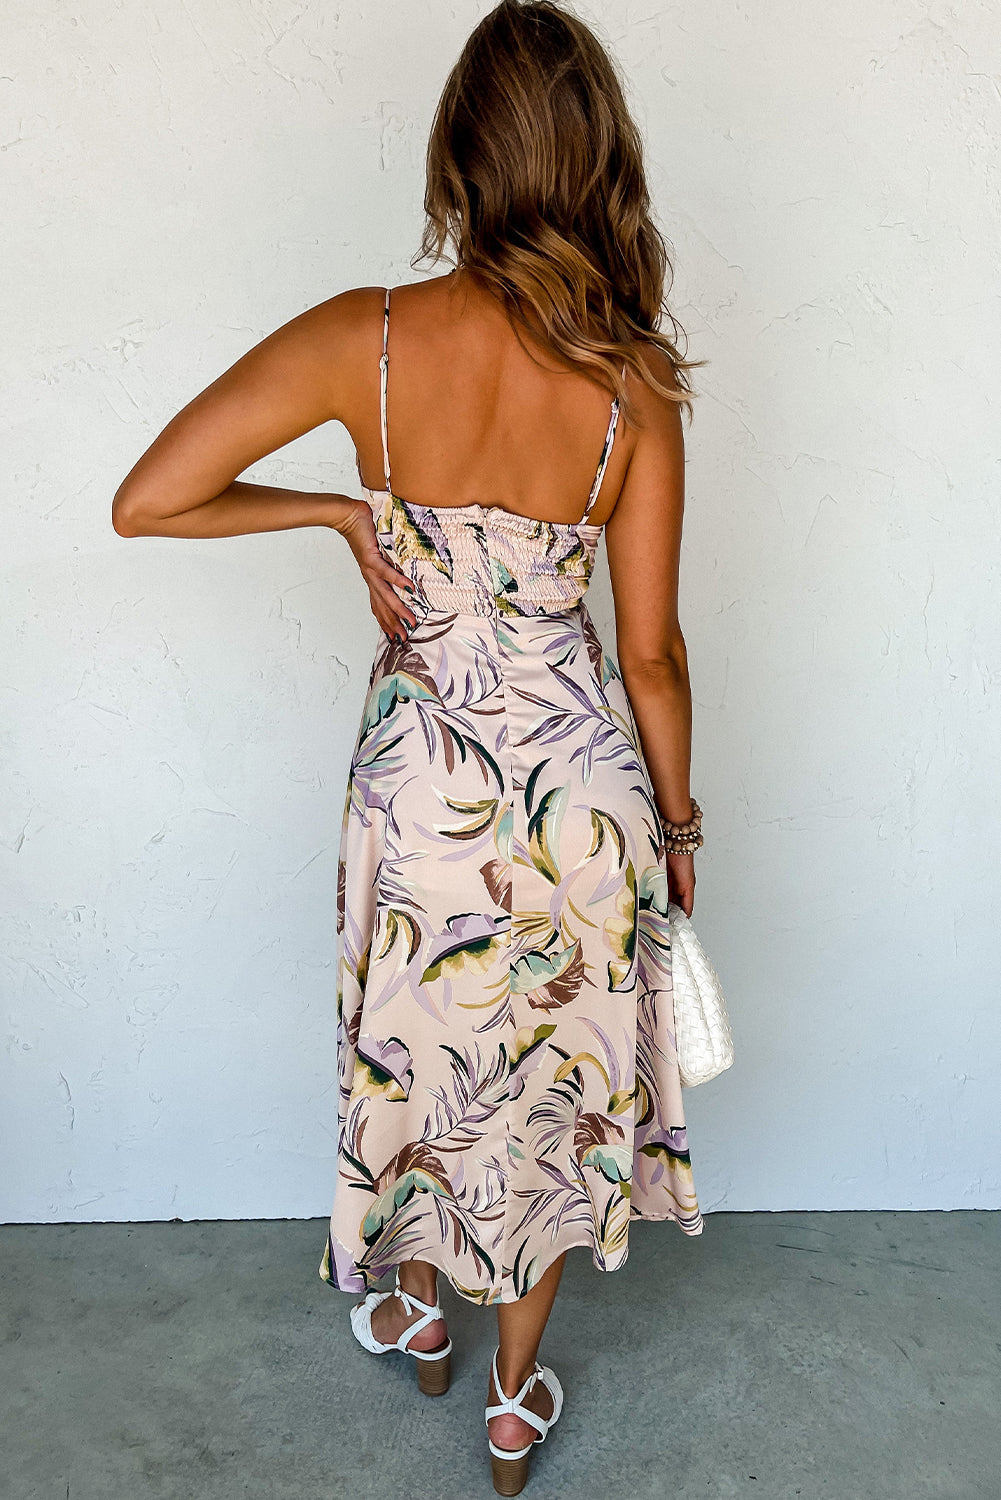 The802Gypsy  dress TRAVELING GYPSY-Tropical Print Spaghetti Strap Dress